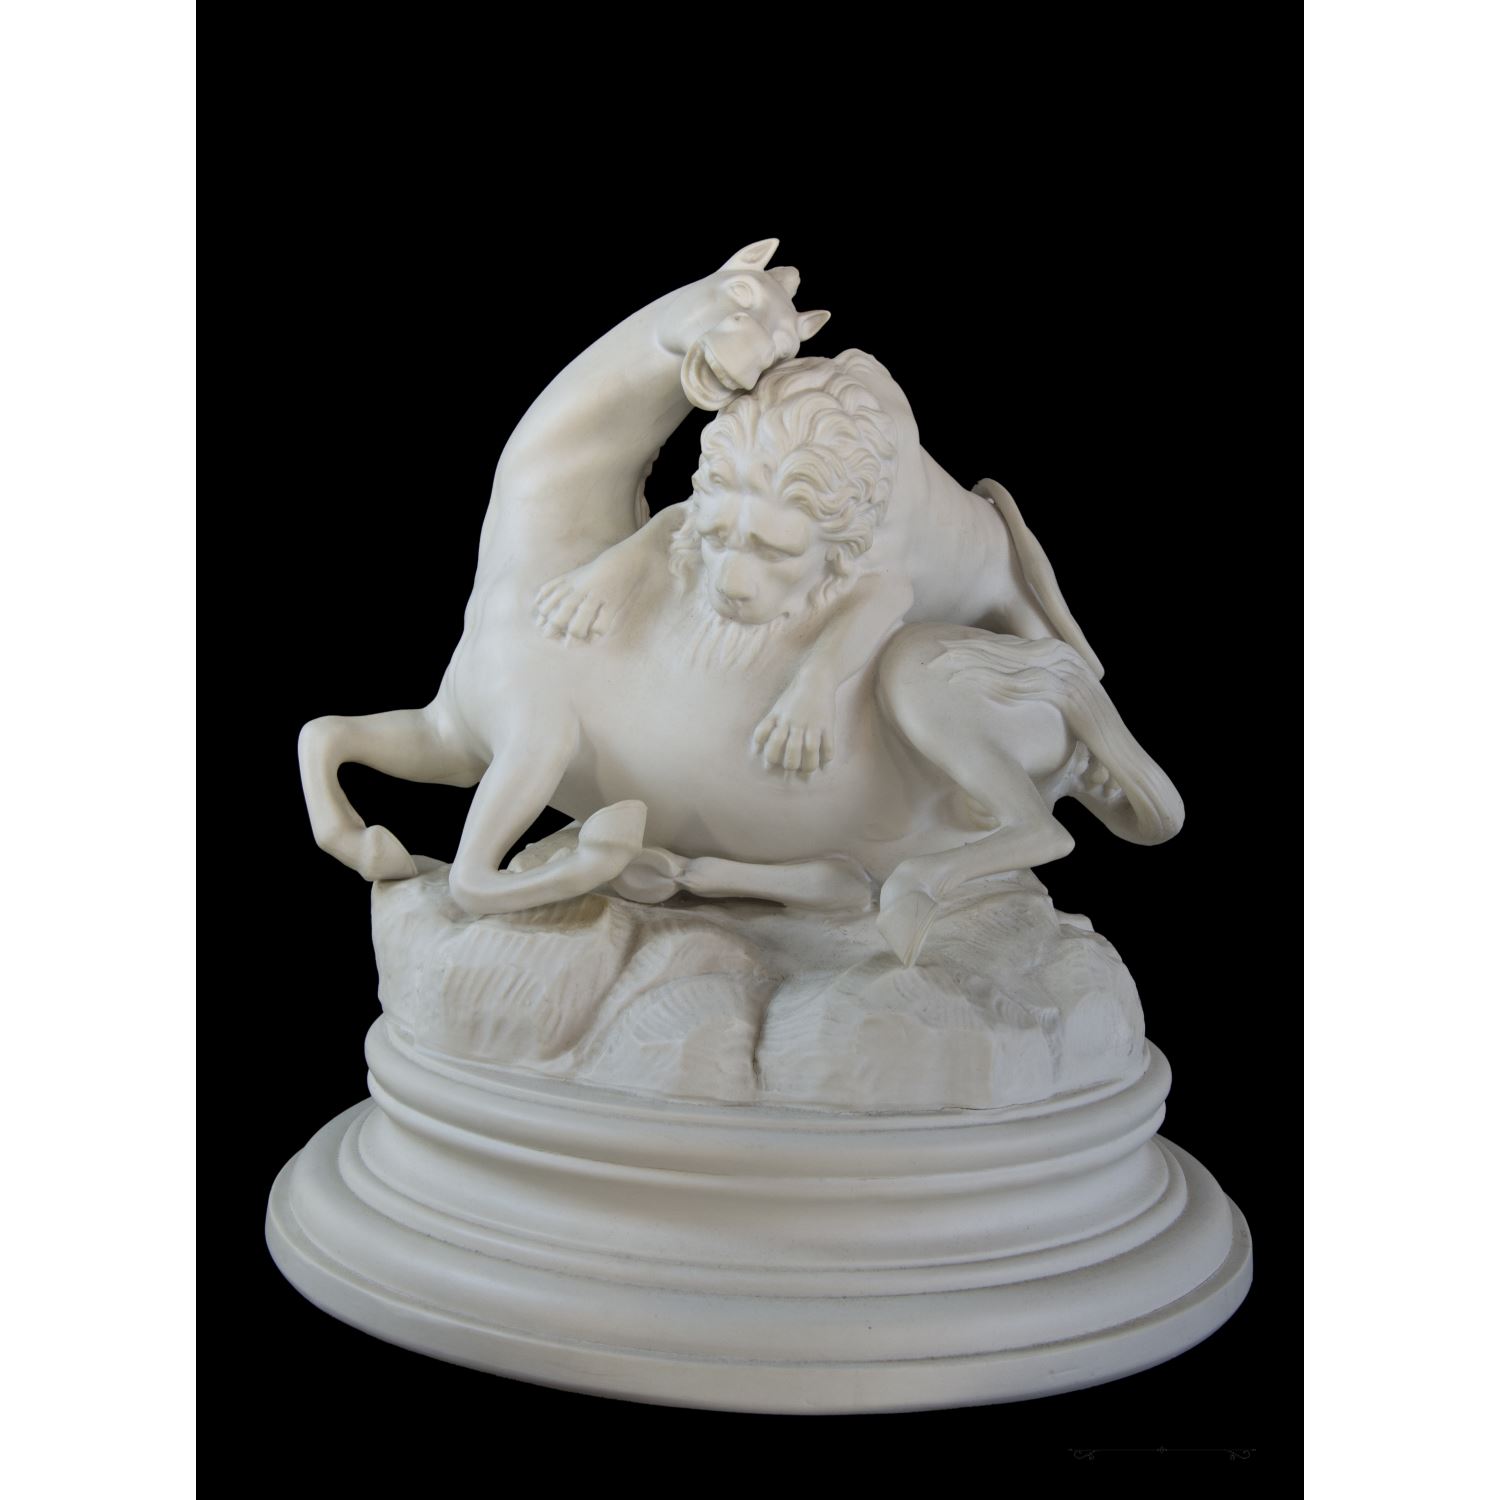 Porcelain figure cazeria s.xx